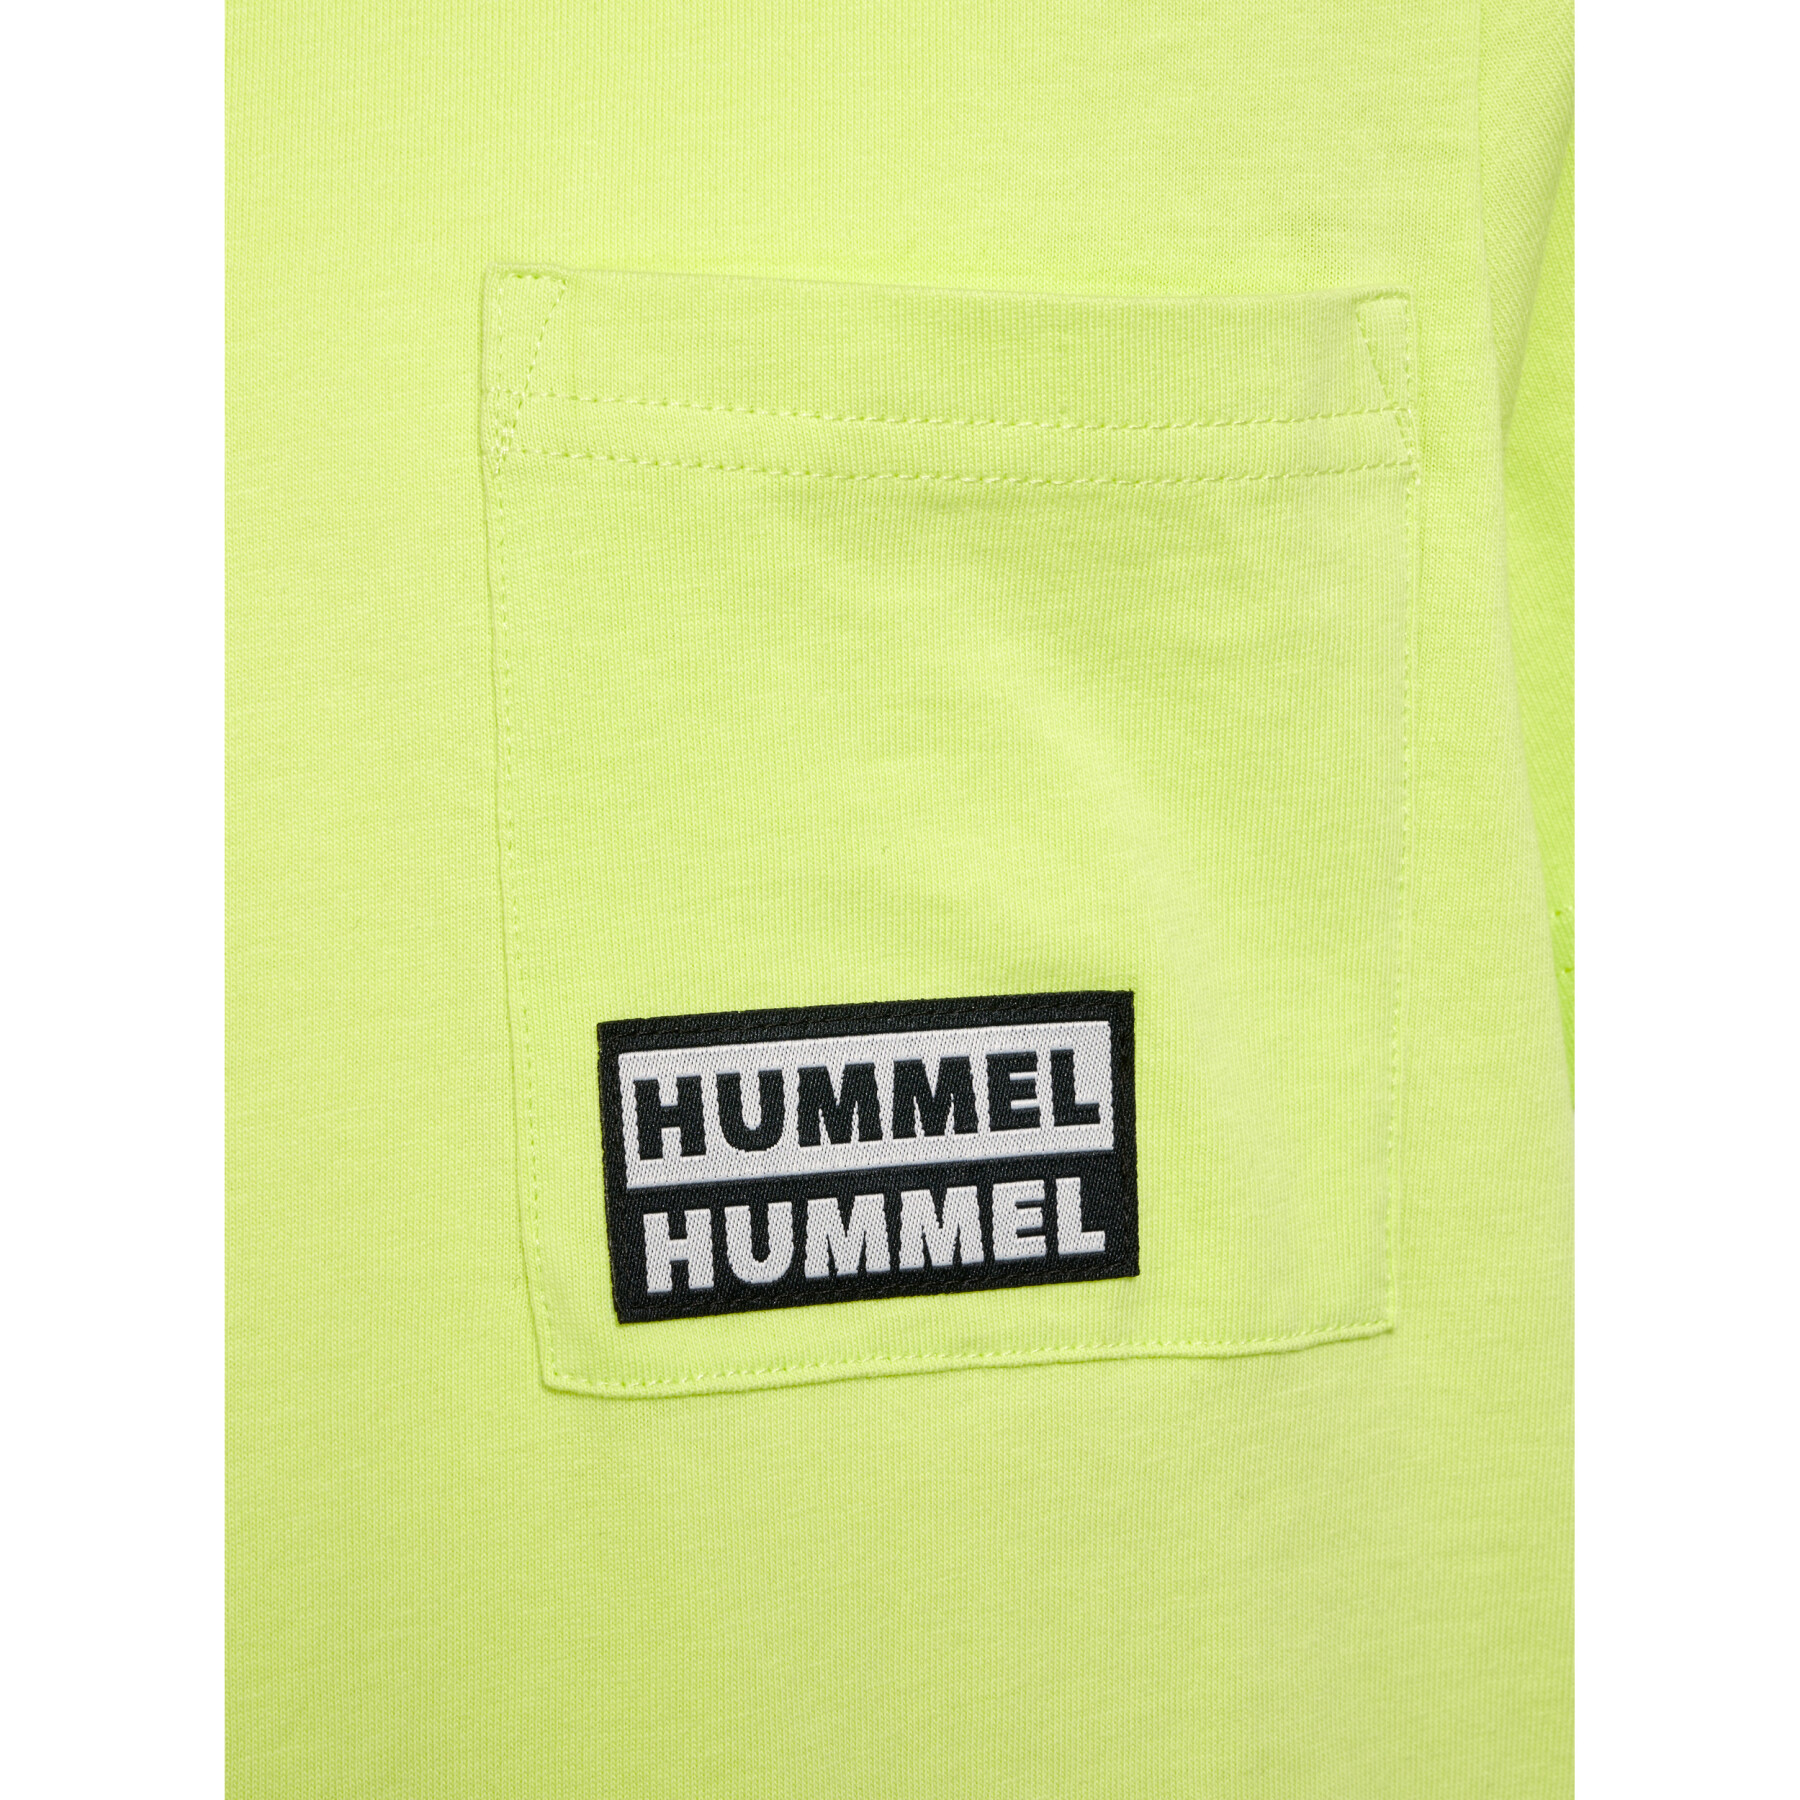 Kinder-T-shirt Hummel Rock